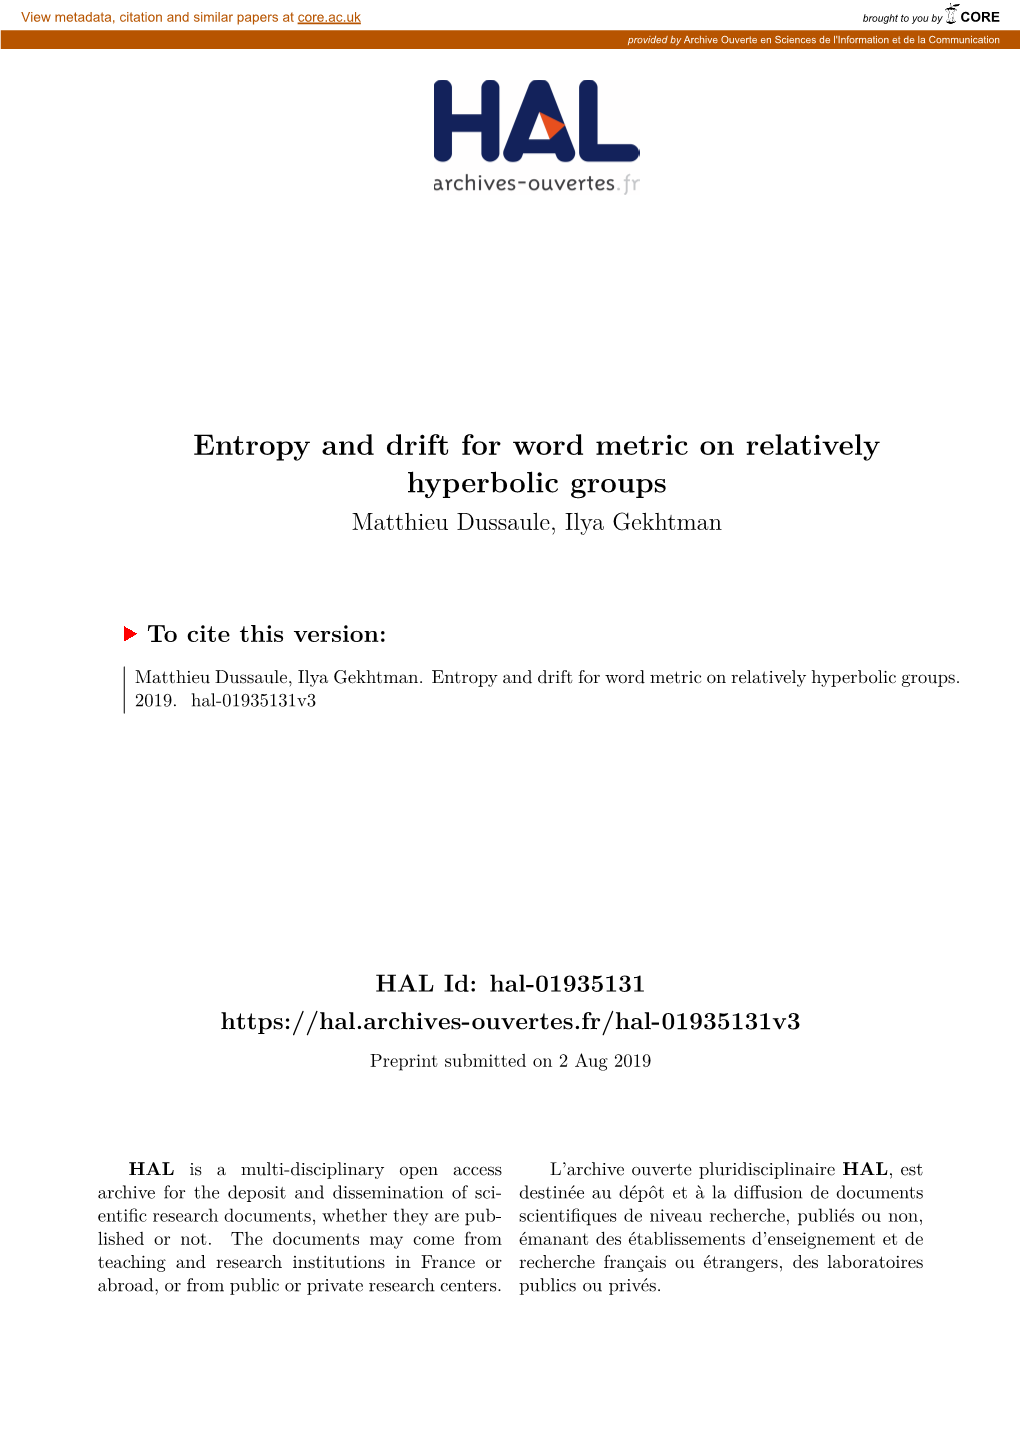 Entropy and Drift for Word Metric on Relatively Hyperbolic Groups Matthieu Dussaule, Ilya Gekhtman